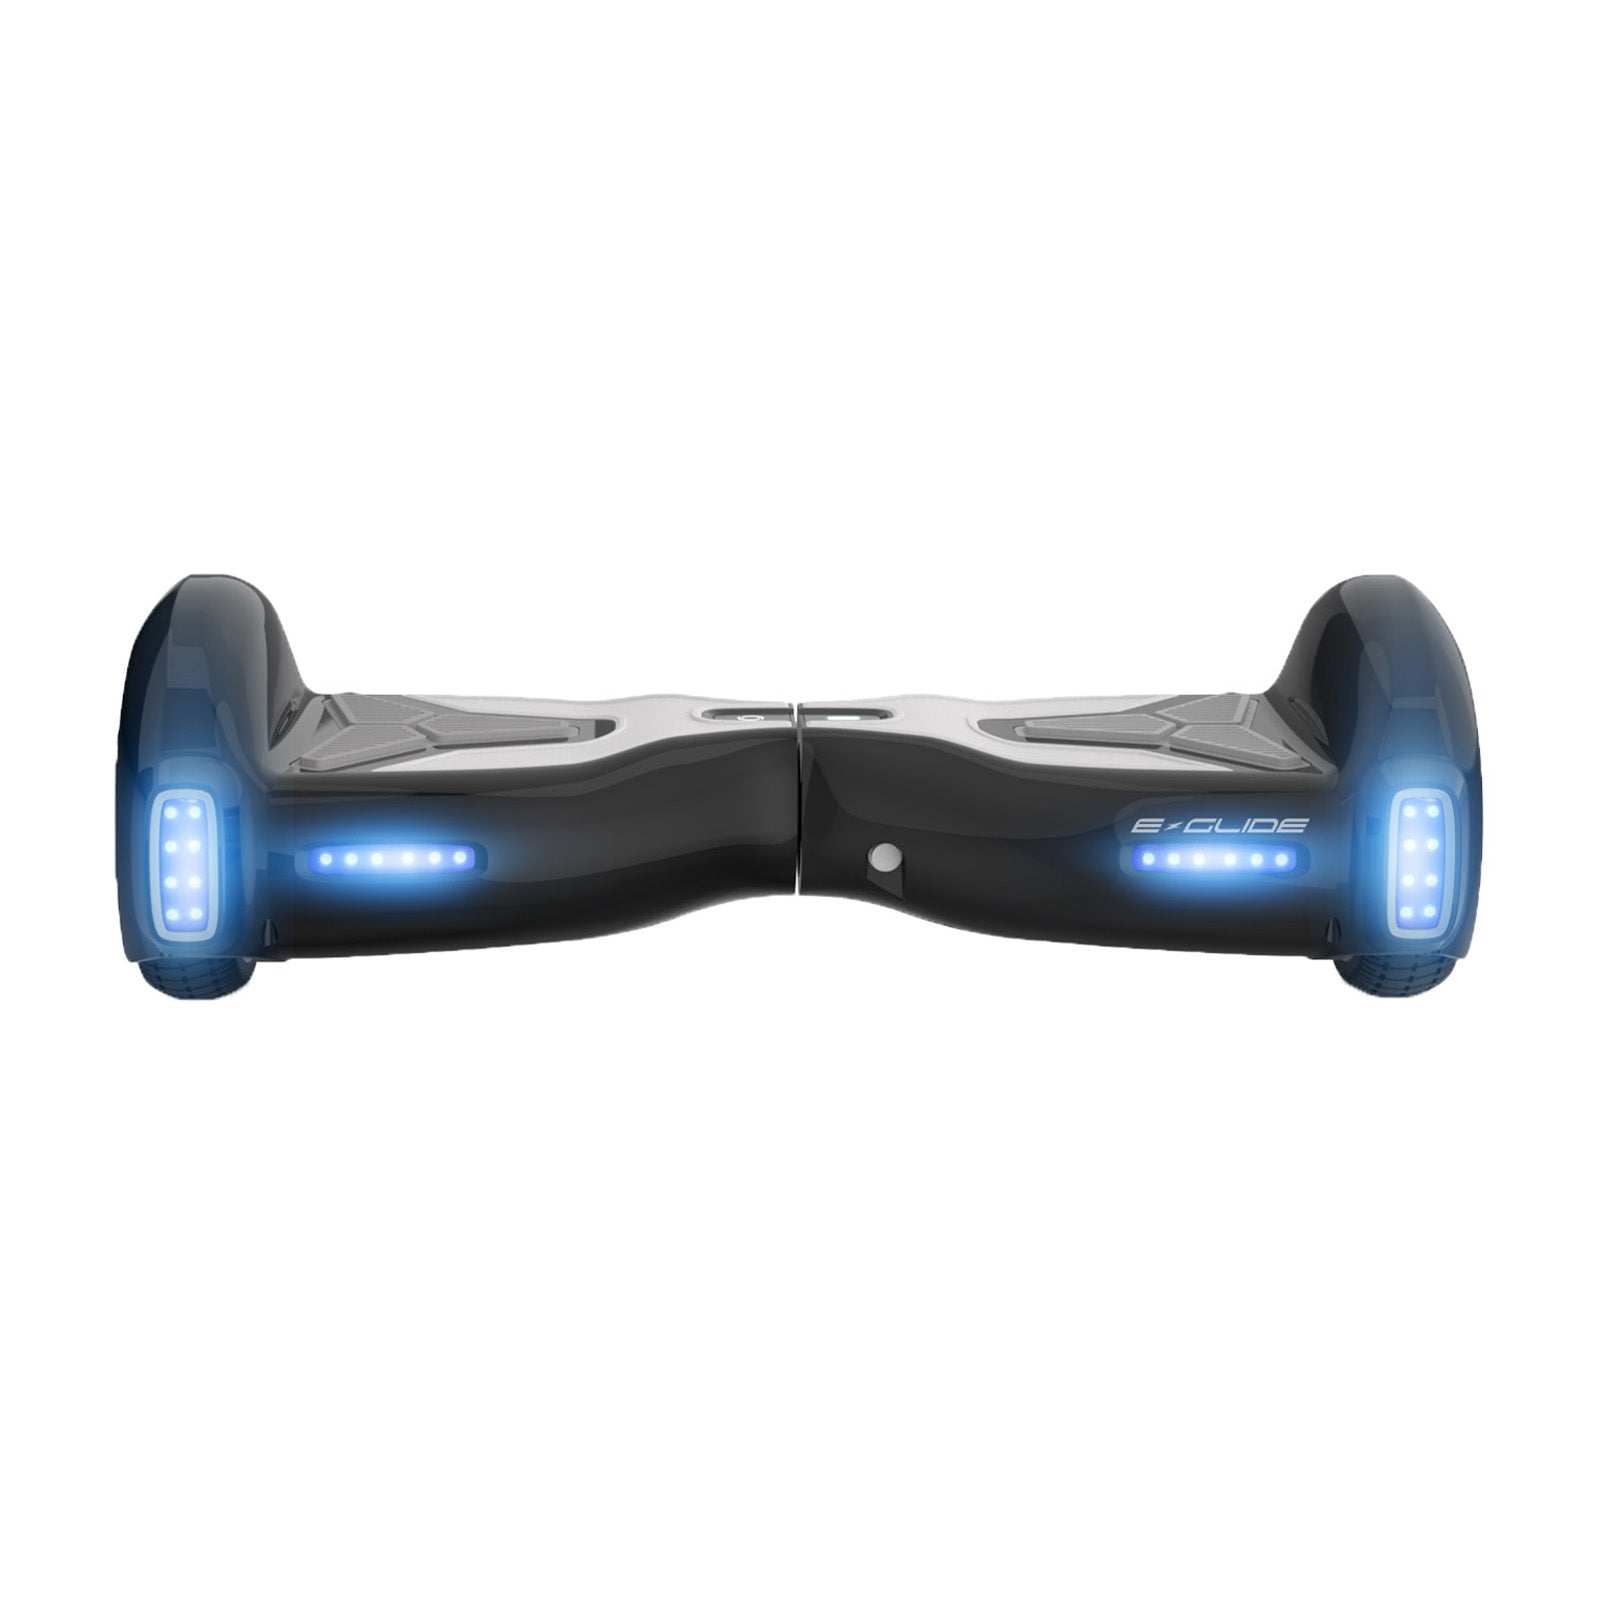 Kundenrezensionen: Windgoo Hoverboard, 6.5" Self Balance  Scooter mit Bluetooth Lautsprecher, LED Lights Elektro Scooter E-Skateboard  (Black)